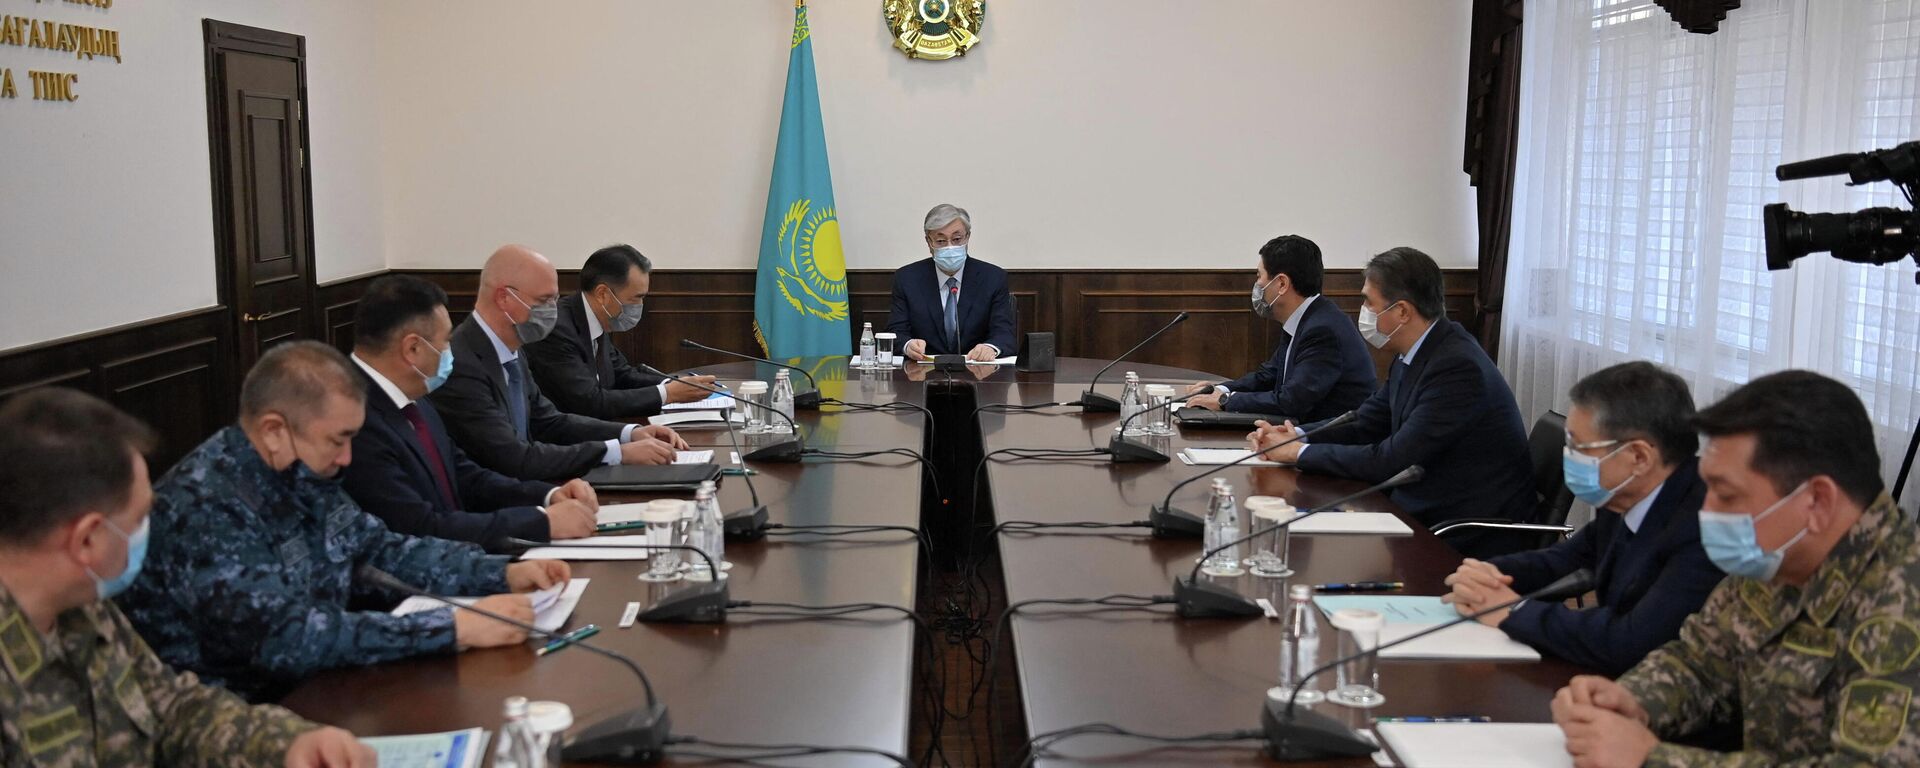 El presidente kazajo Kassym-Jomart Tokayev preside una reunión del centro de operaciones de emergencia tras las protestas masivas en Almaty, Kazajistán - Sputnik Mundo, 1920, 12.01.2022